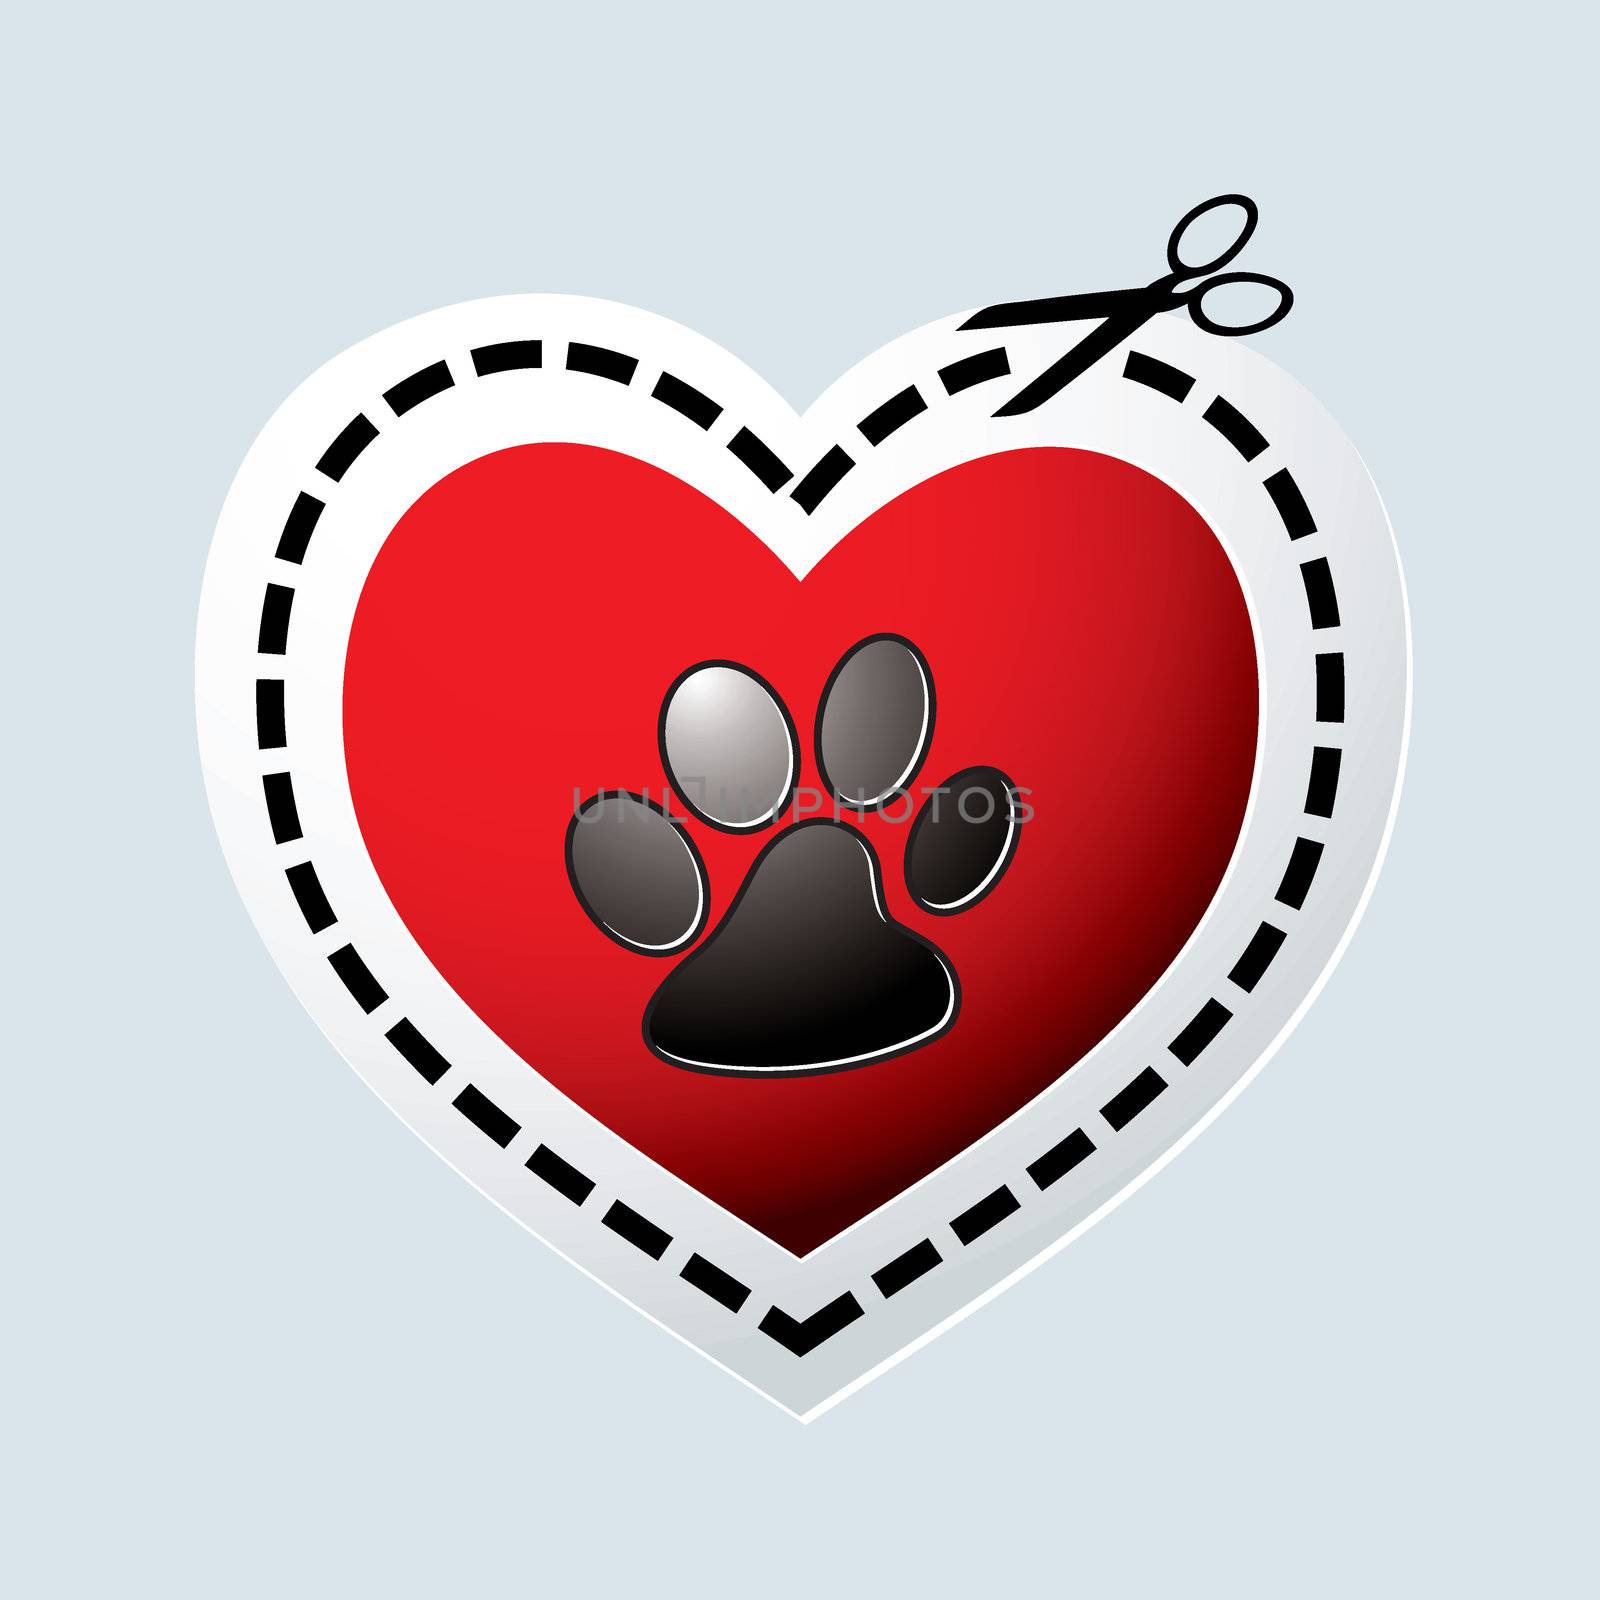 Dog paw heart by nicemonkey